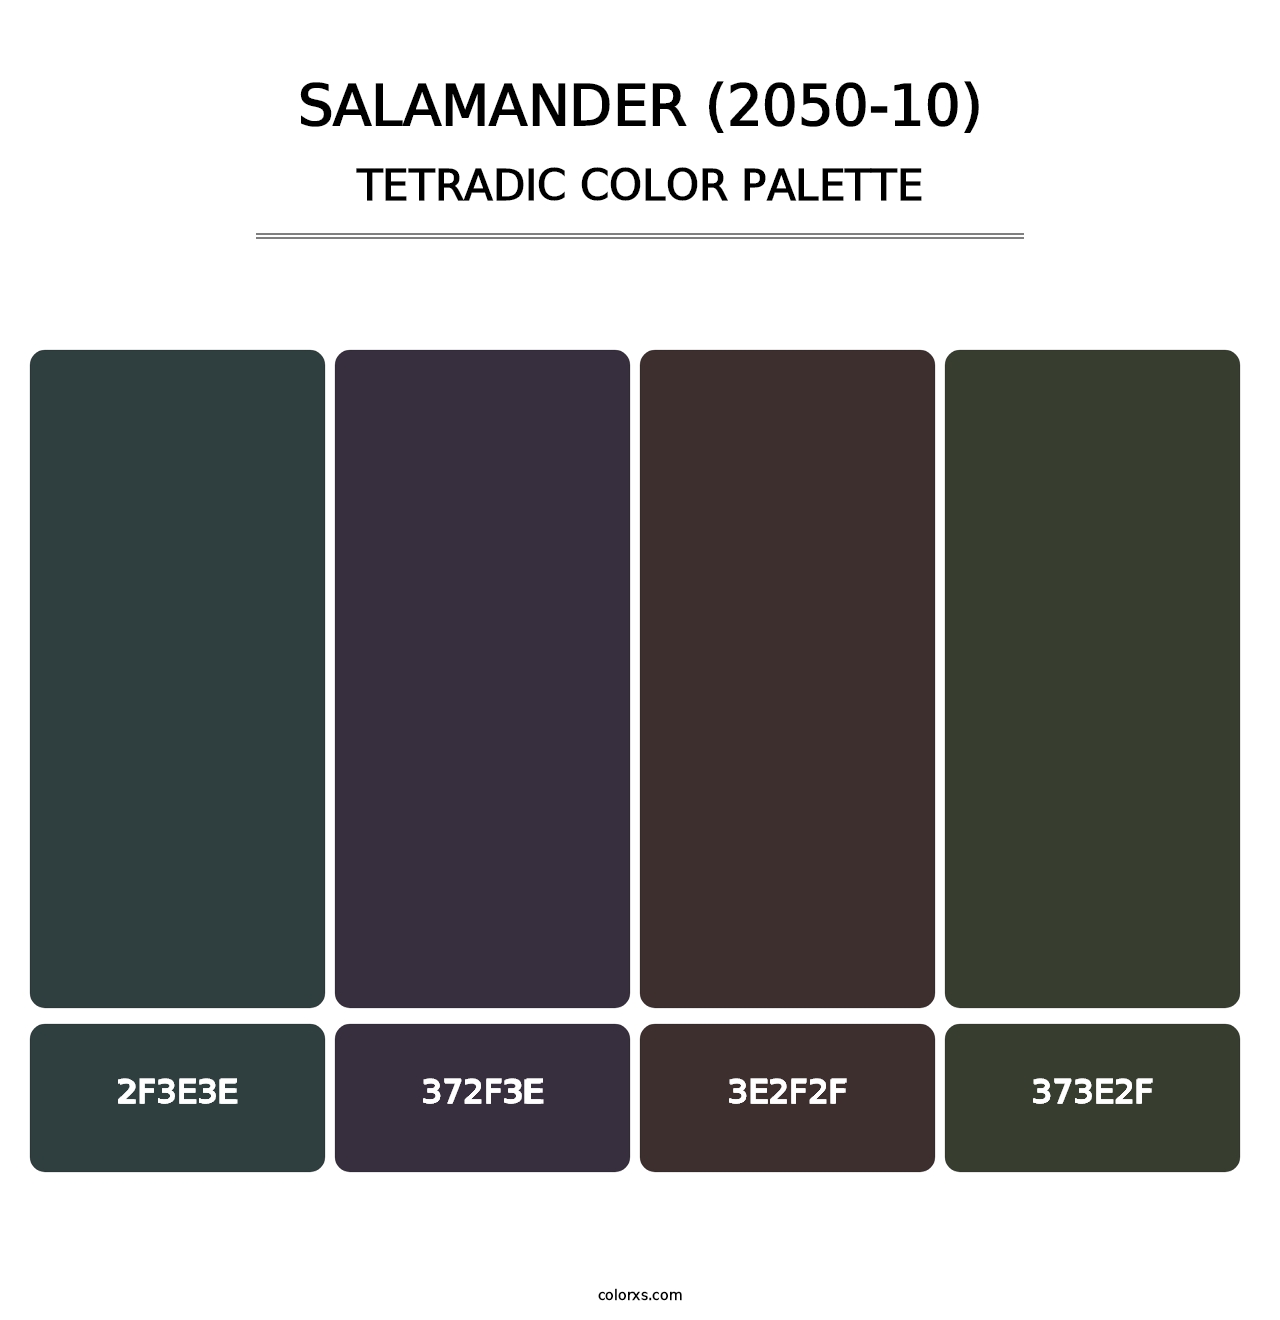 Salamander (2050-10) - Tetradic Color Palette